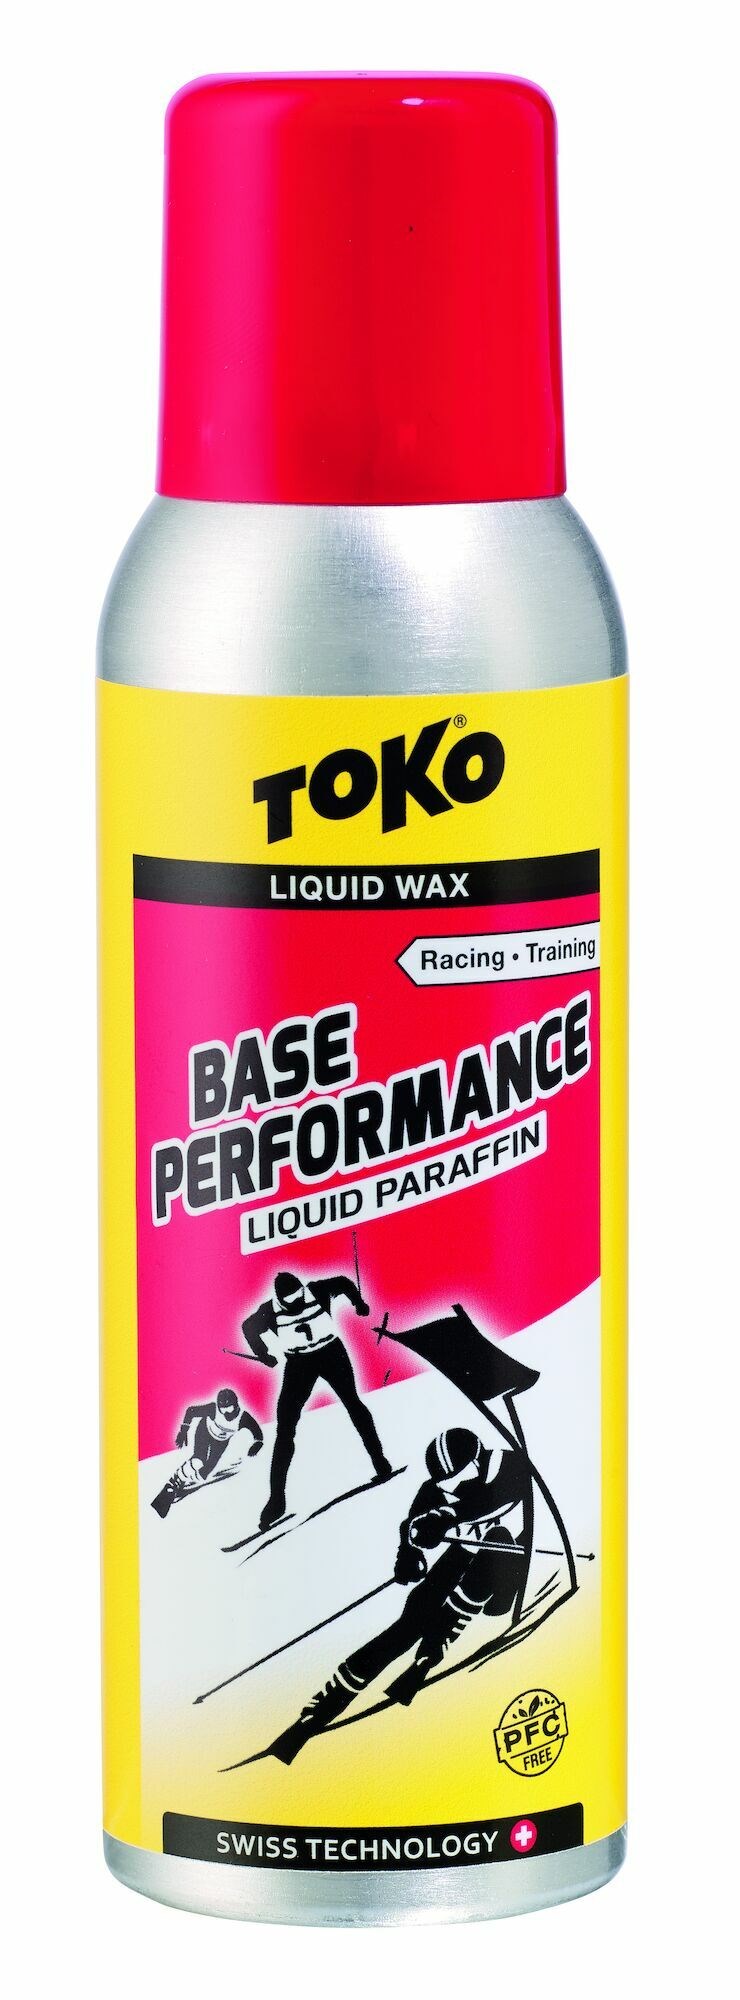 TOKO Base Performance Liquid Paraffin red